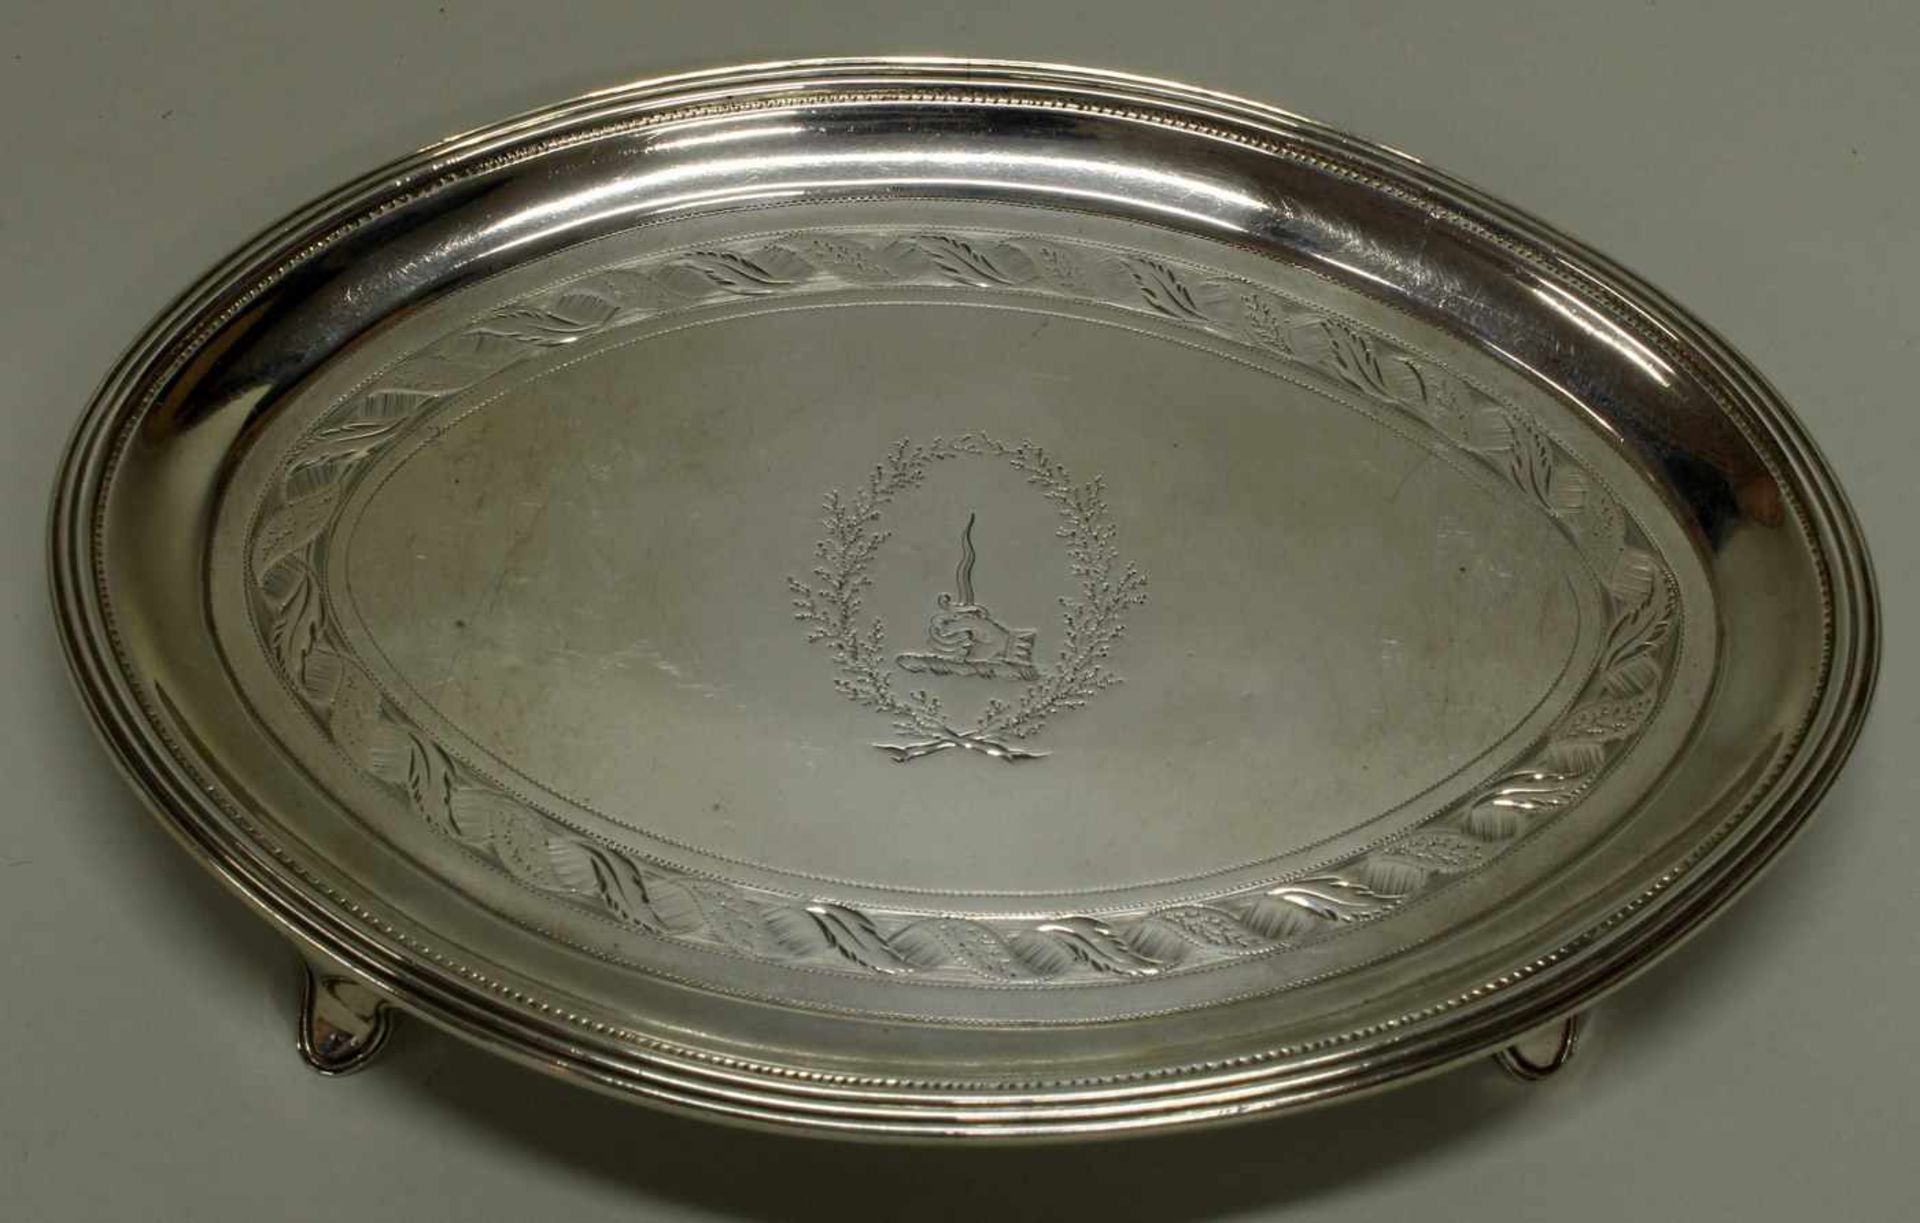 Salver, Silber 925, London, 1799, John Emes, oval, Spiegel mit Spiralband und Emblem, Profilrand, - Image 3 of 6